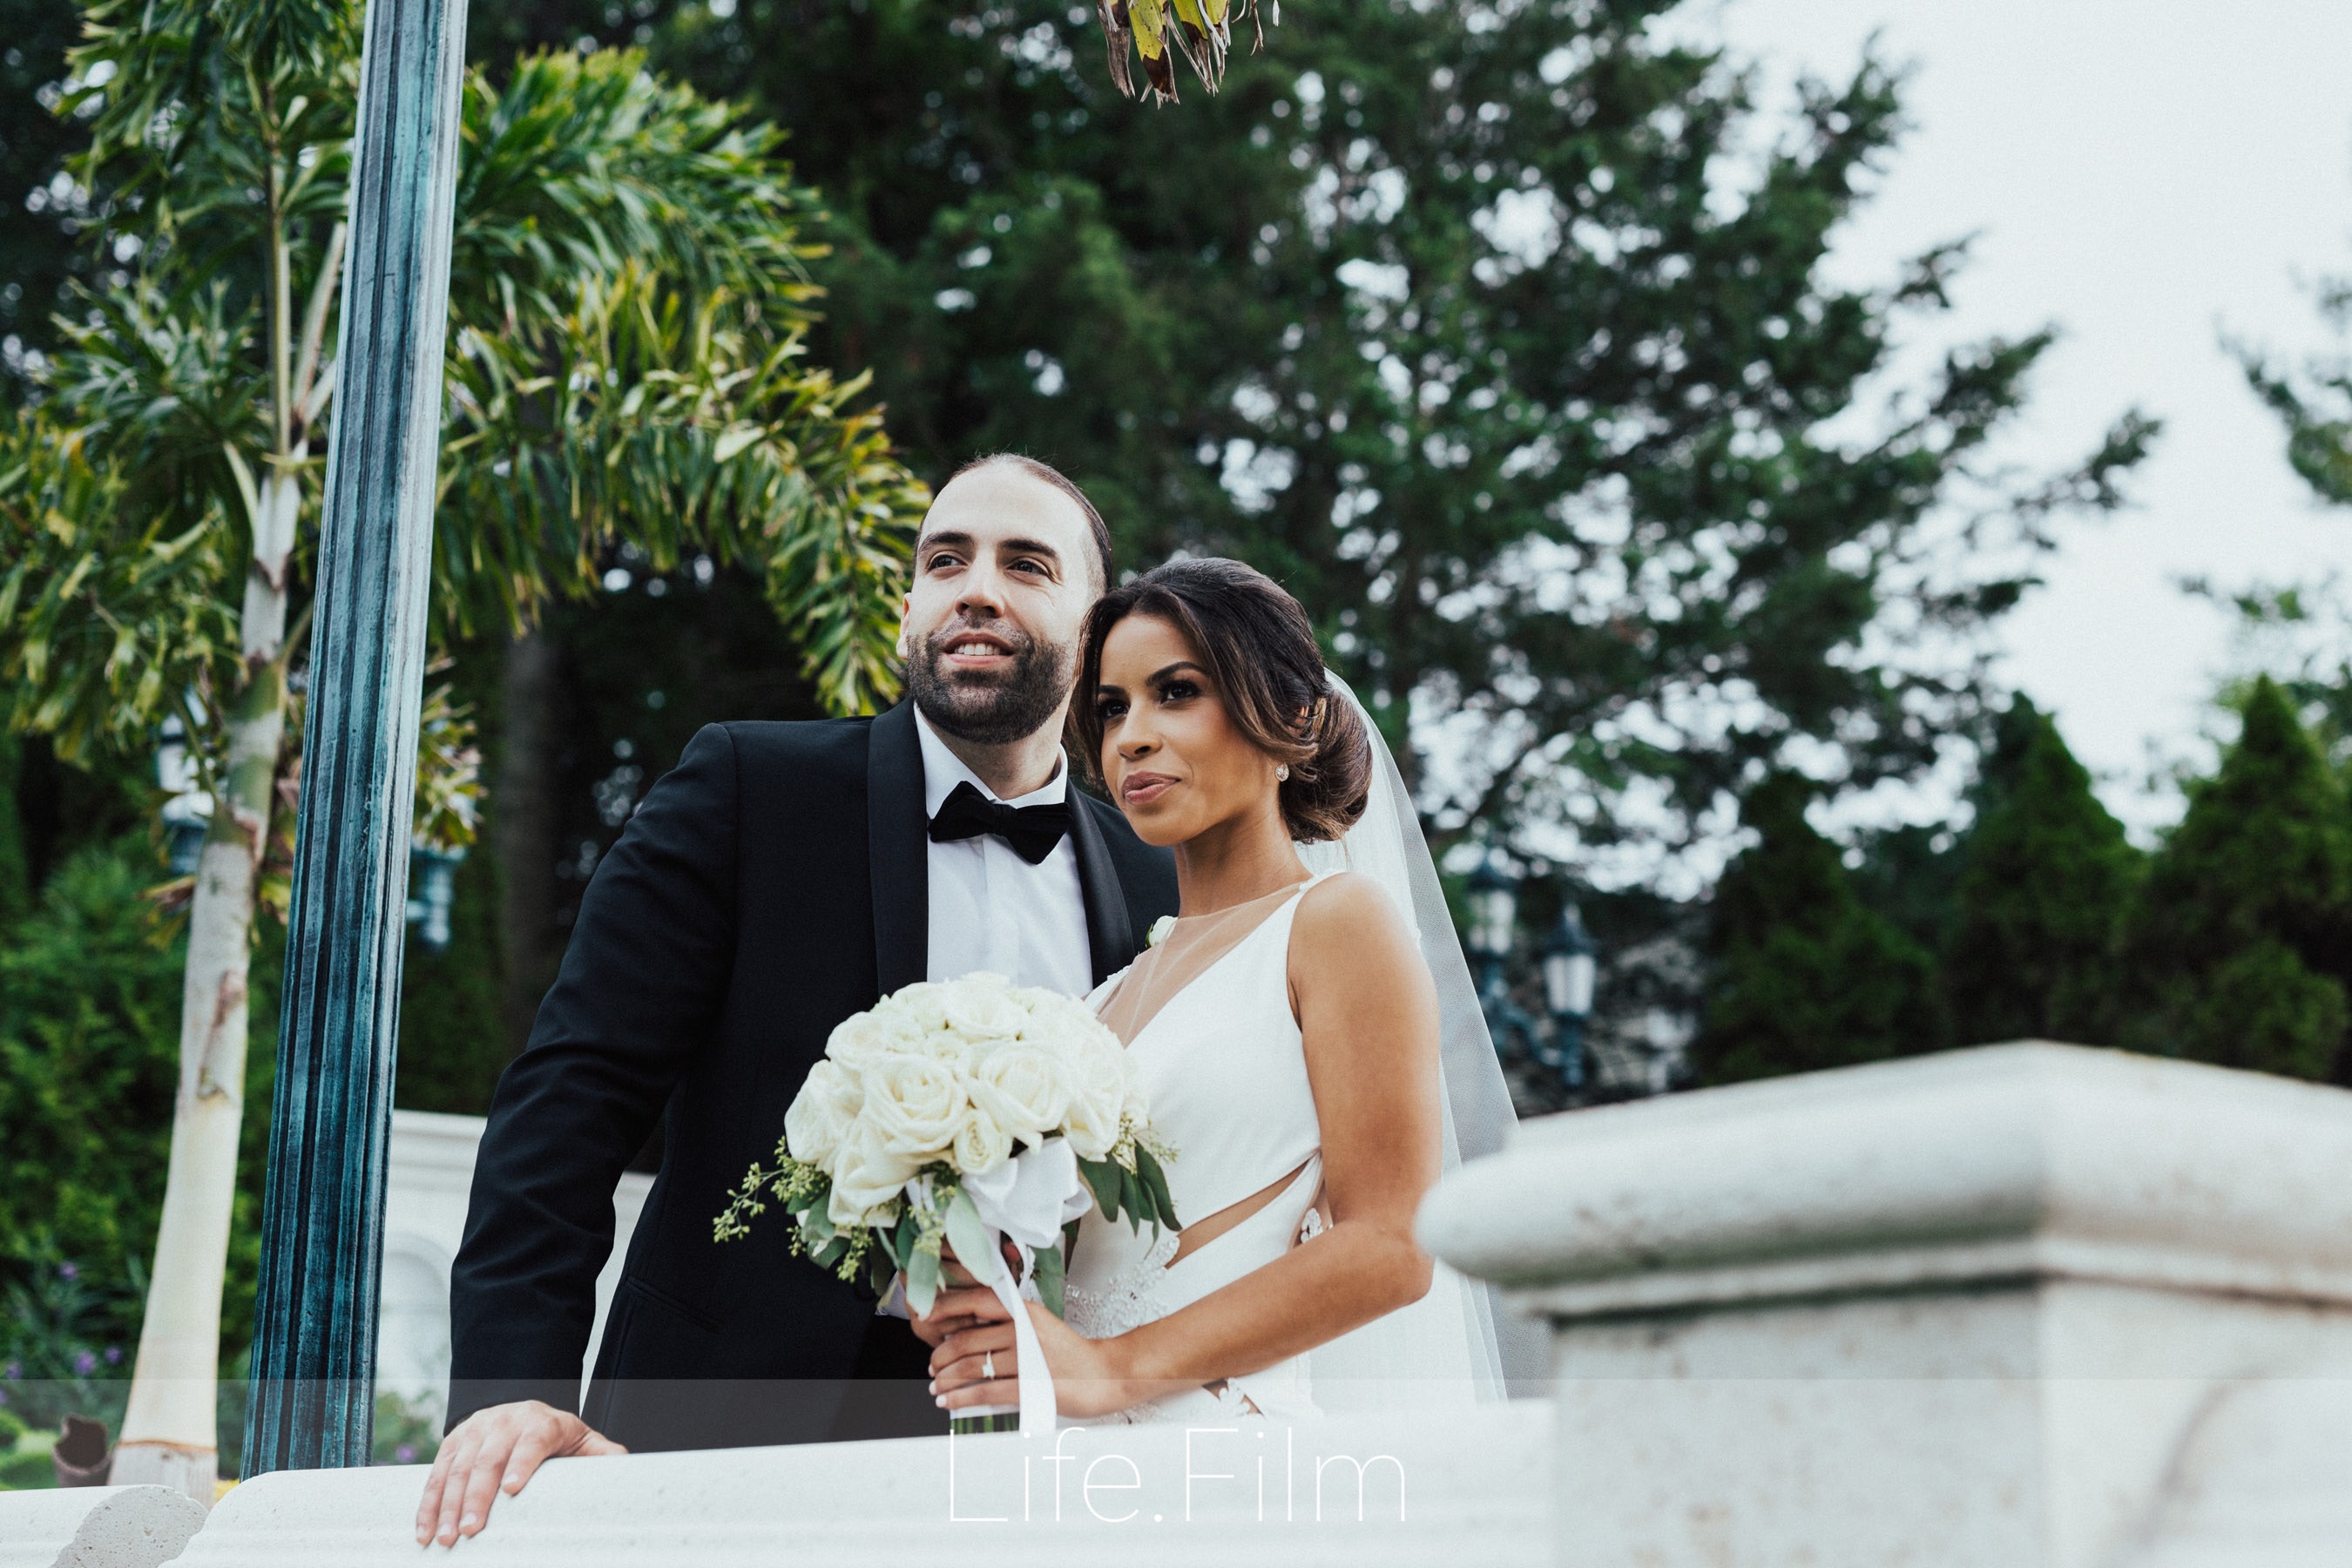 Wedding - Sand Castle | Wedding Photography and Wedding Videography